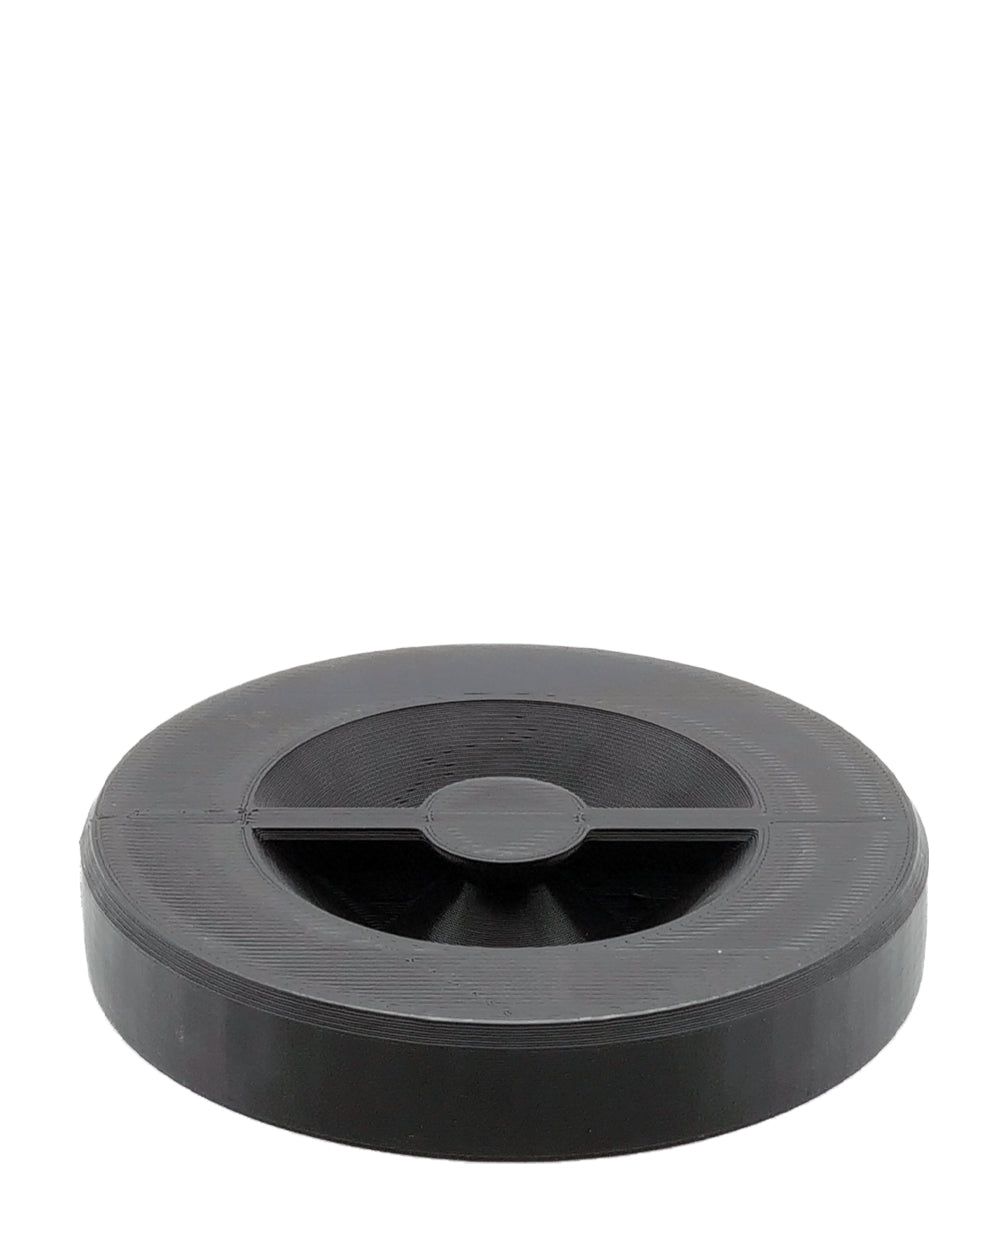 HUMBOLDT | Black Pre-Rolled Cones Filling Machine Cartridge 98mm Slim | Fill 121 Cones Per Run - 3